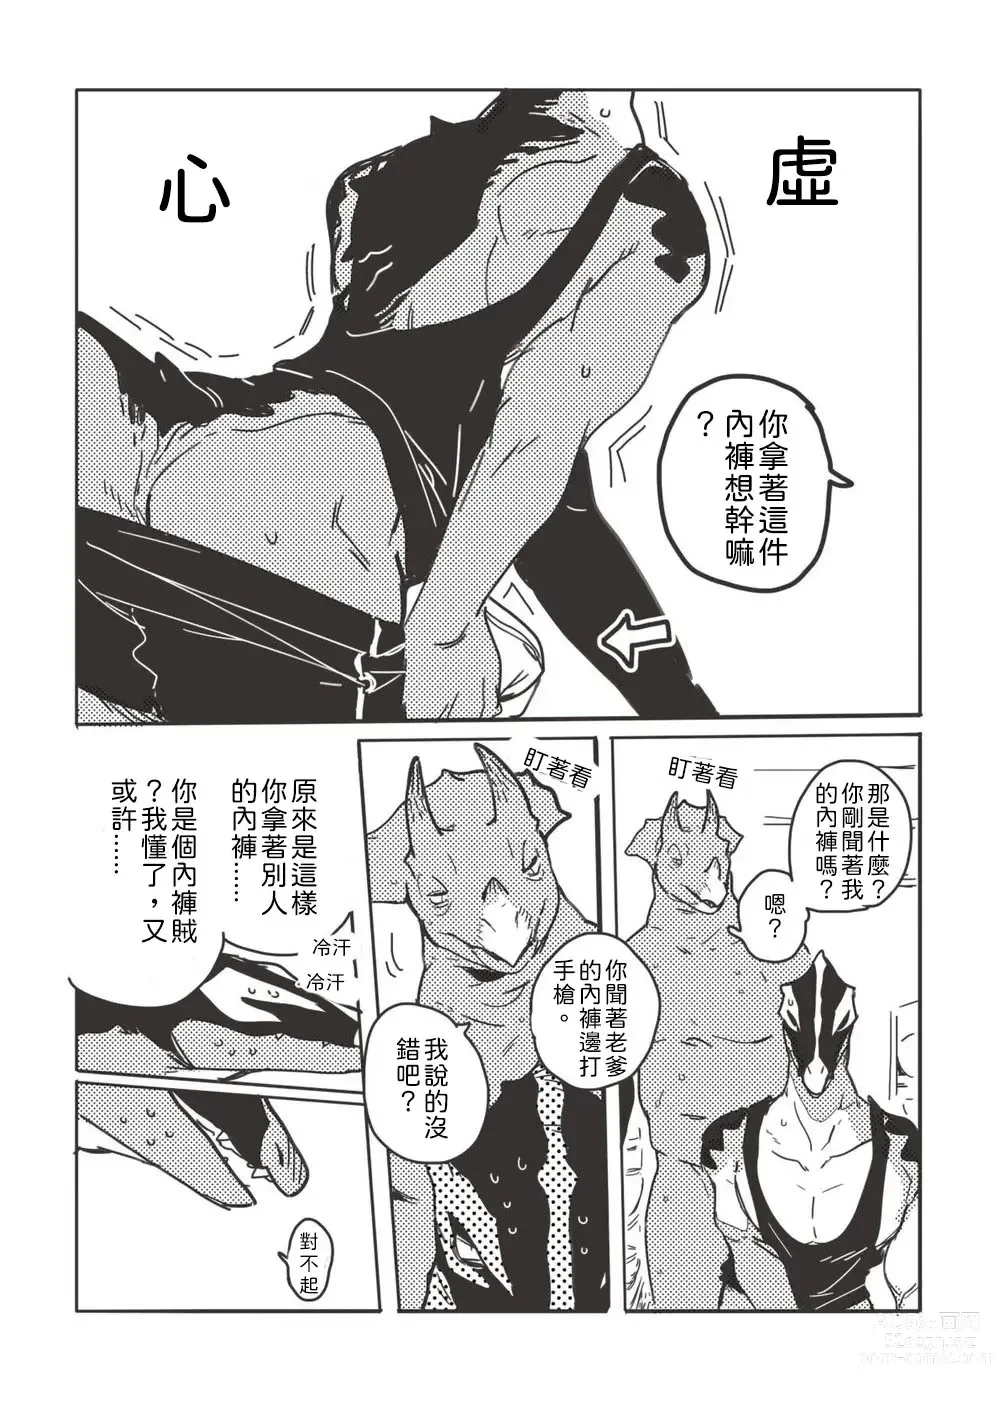 Page 8 of doujinshi Hot spring Zaurus 溫泉恐龍